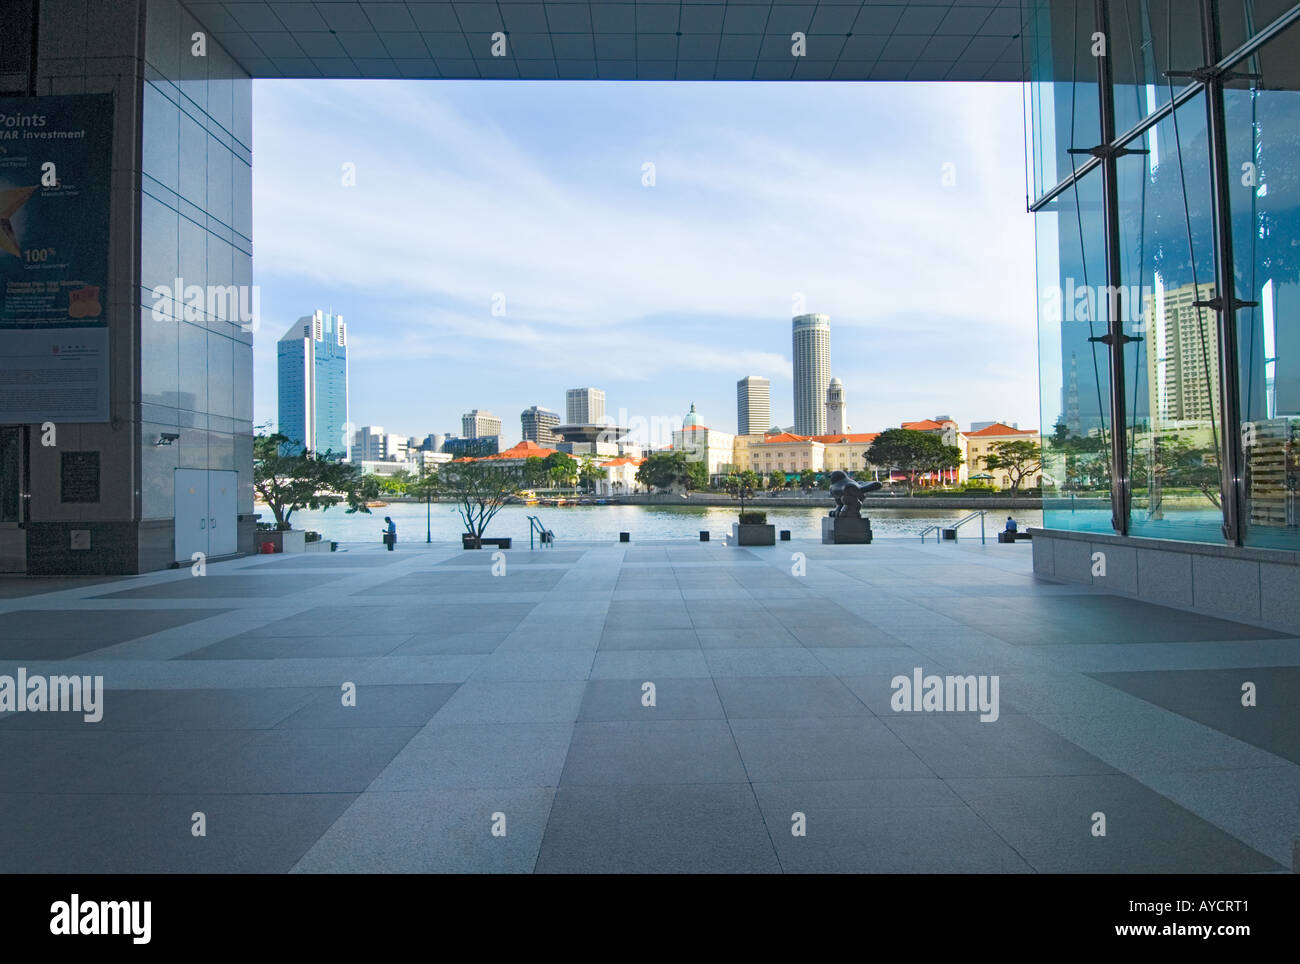 Geschäft Bezirk UOB Mitte Zentrum Plaza River Quay Singapur Asien freuen Raffles Landeplatz Stockfoto